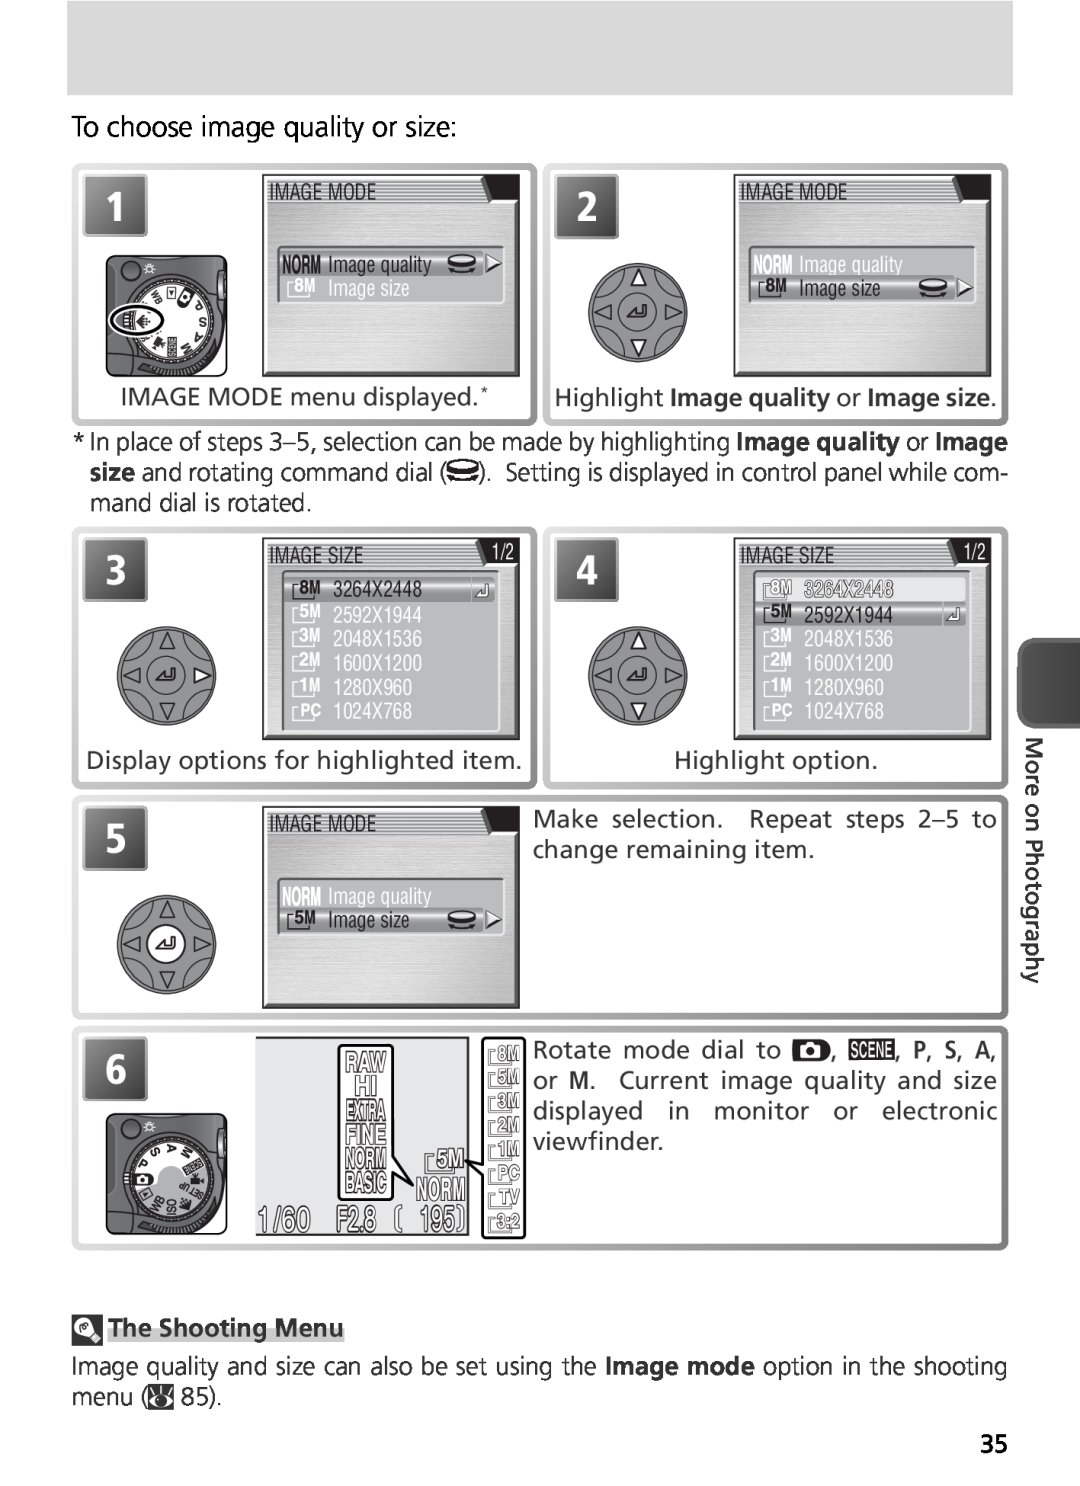 Nikon COOLPIX8800 manual 1/60 F2.8, To choose image quality or size, The Shooting Menu 